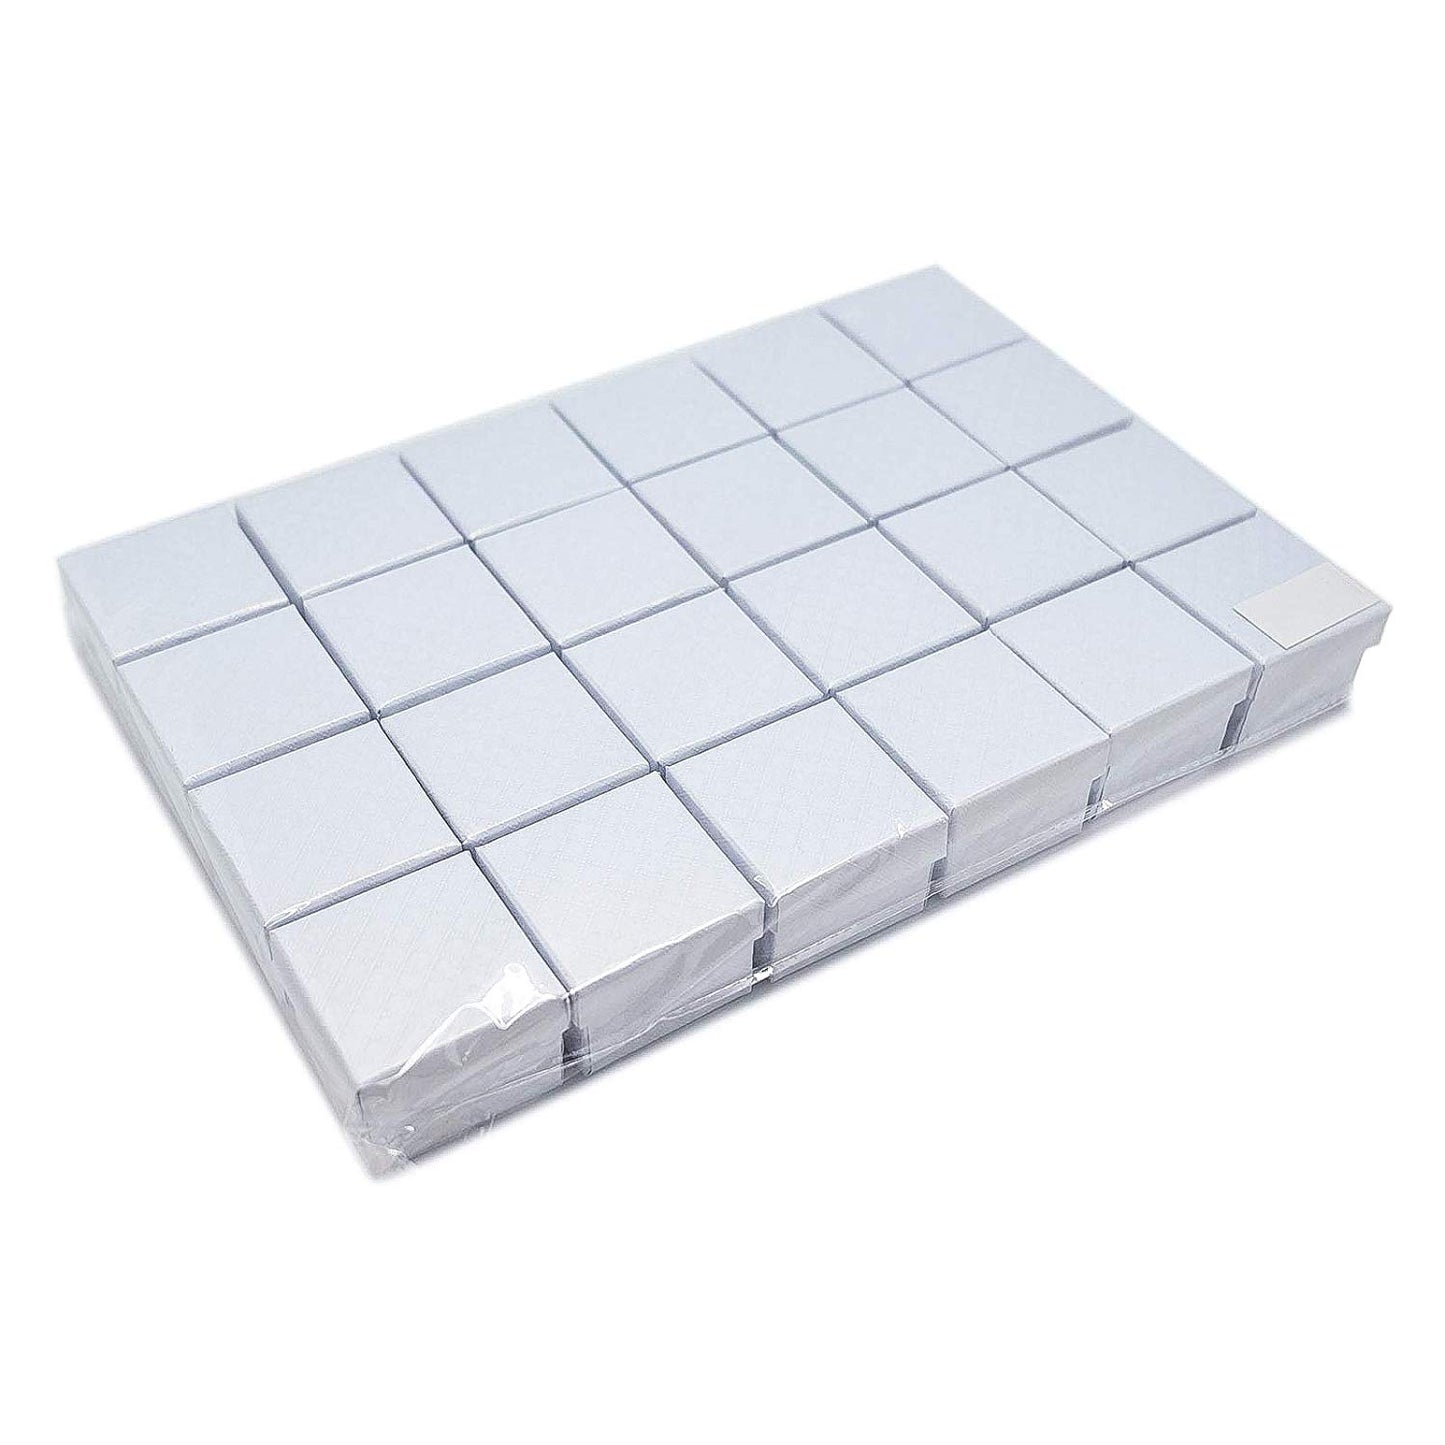 1 3/4" x 1 3/4" White Diamond Pattern Cardboard Jewelry Box